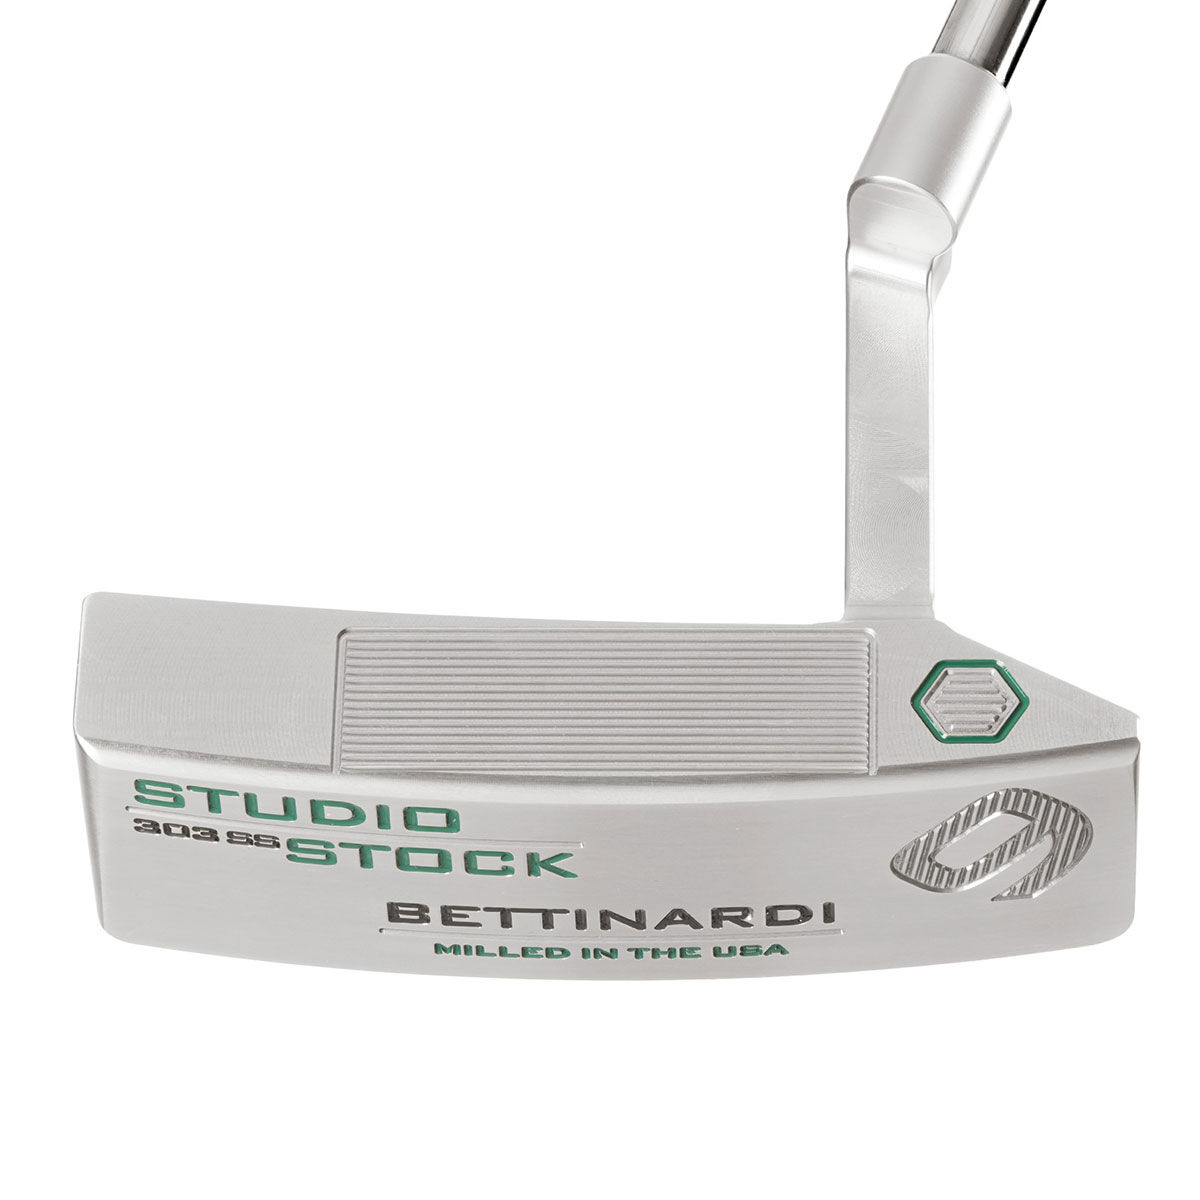 Bettinardi Studio Stock 9 Plumbers Neck Golf Putter - Custom Fit | American Golf